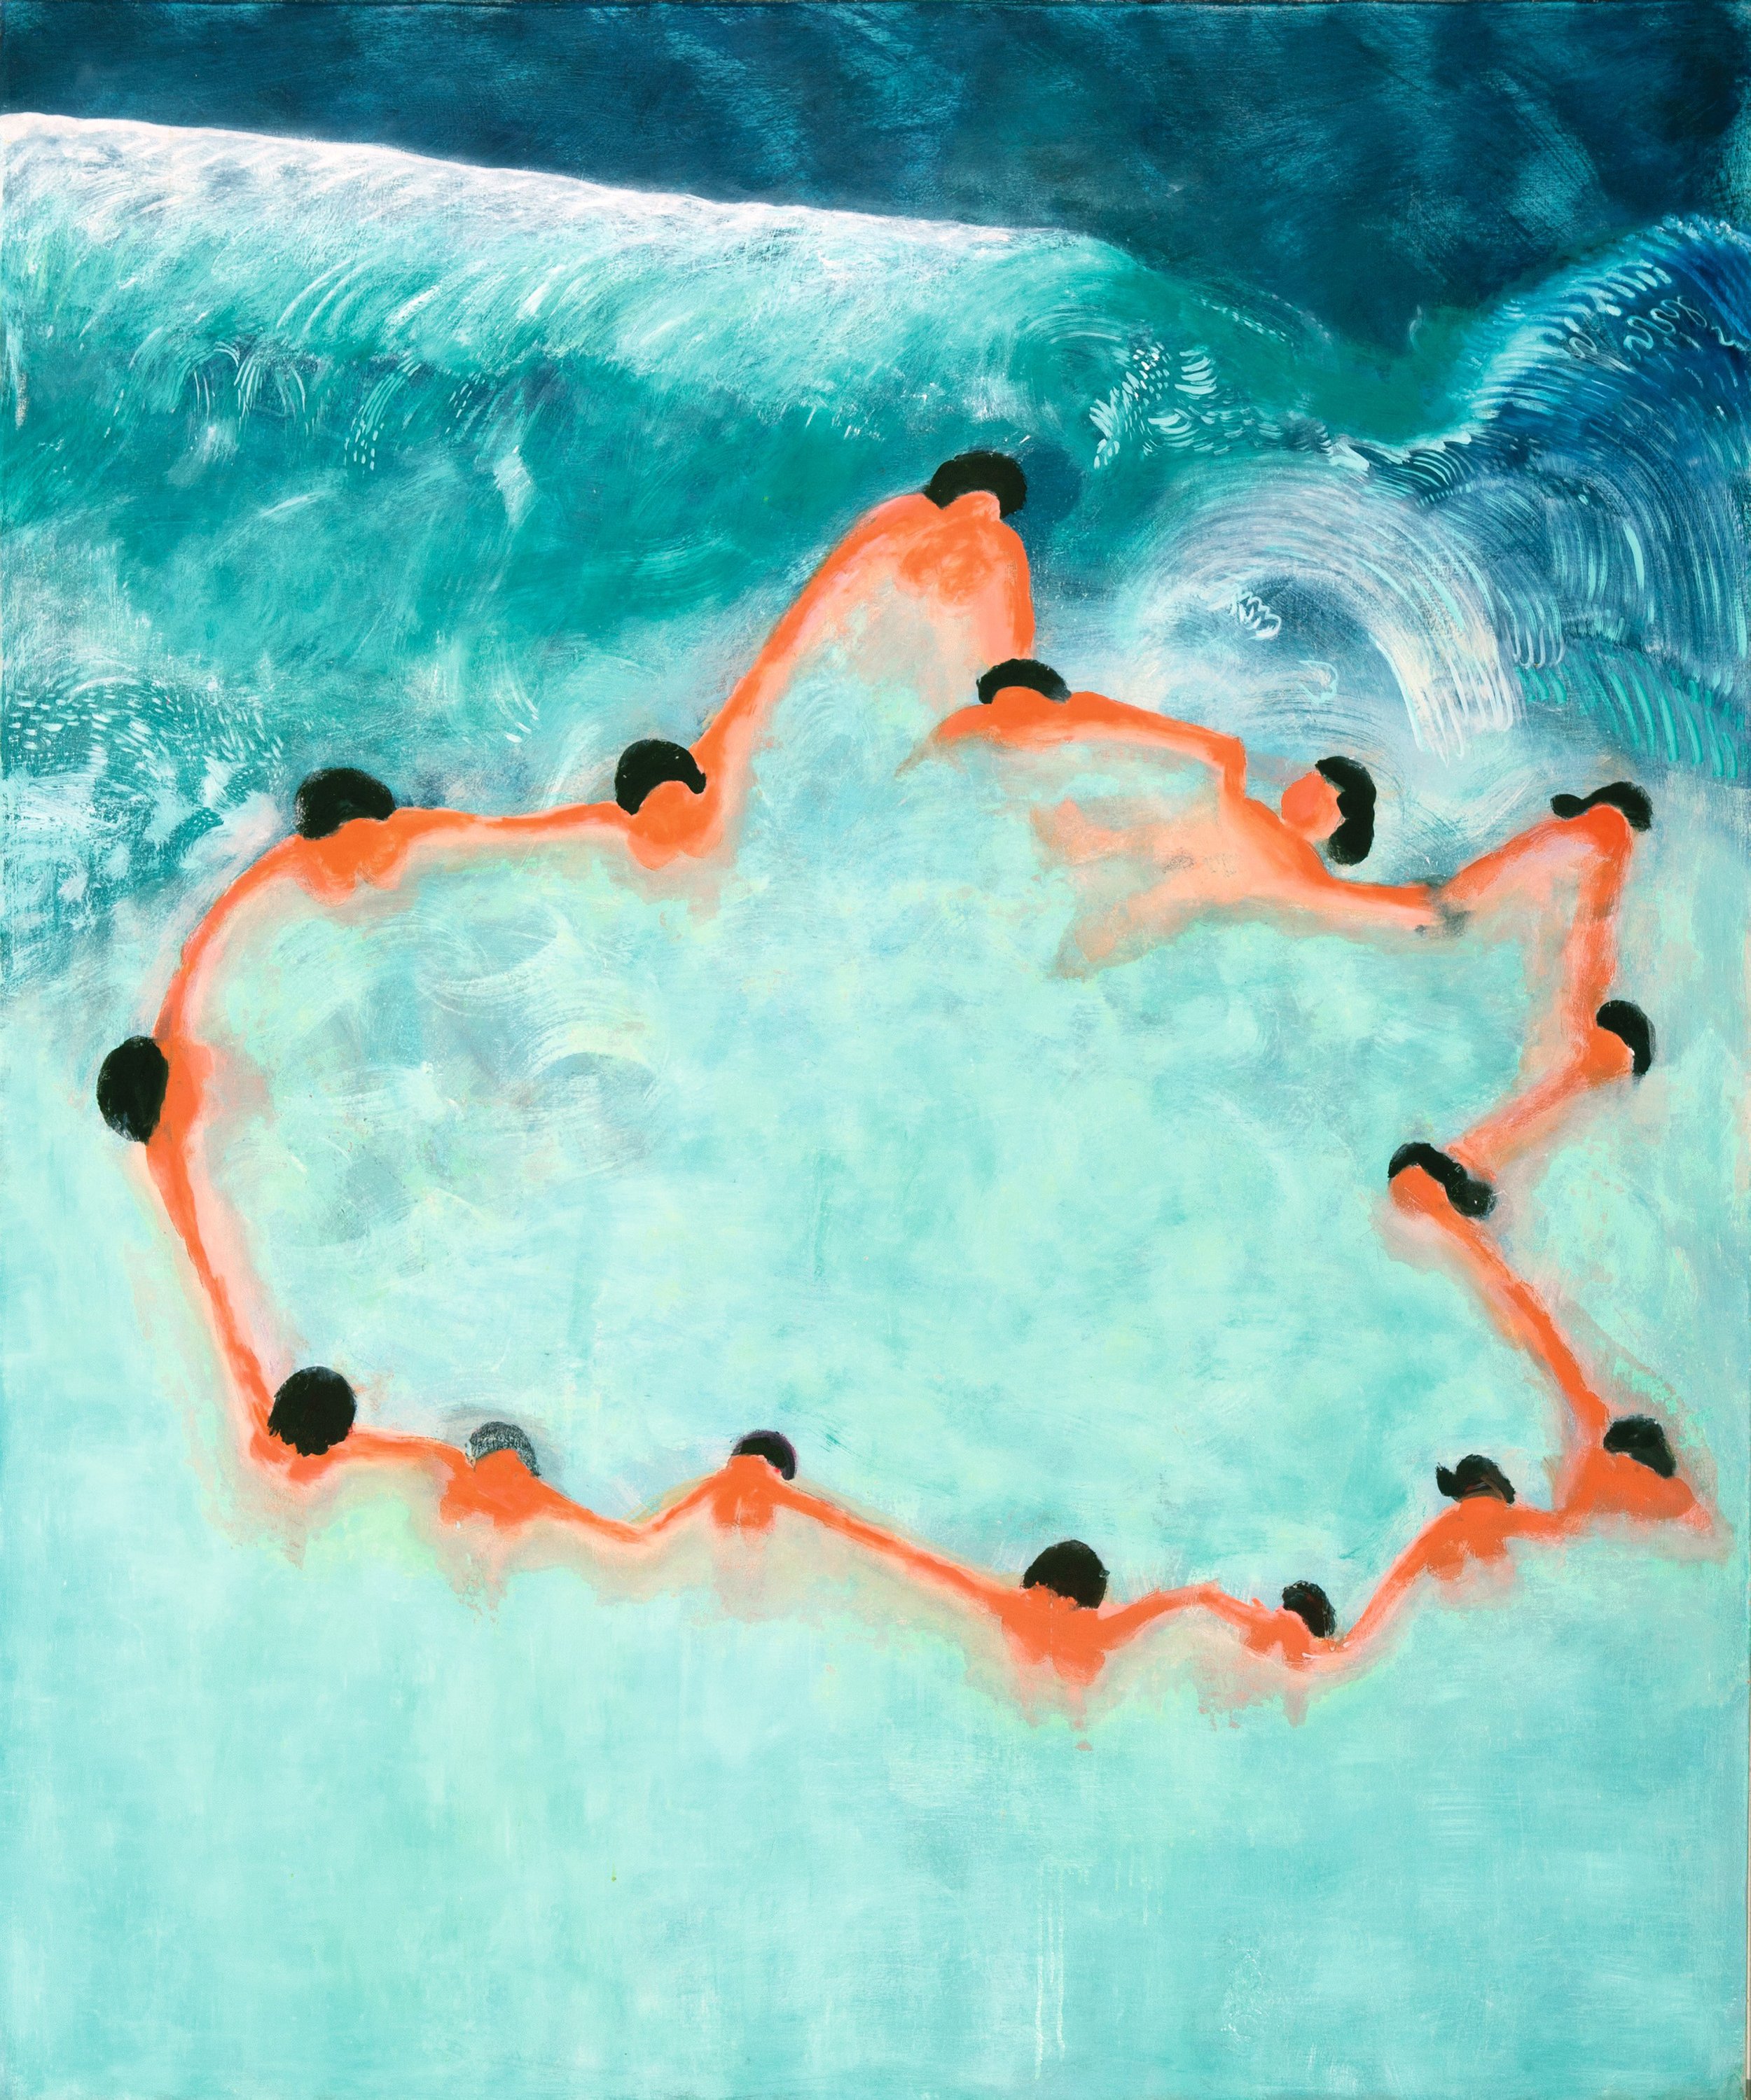  Katherine Bradford (United States, born 1942),  Group Swim,  2004, acrylic on canvas, 72 x 60 inches. Private collection © Katherine Bradford  